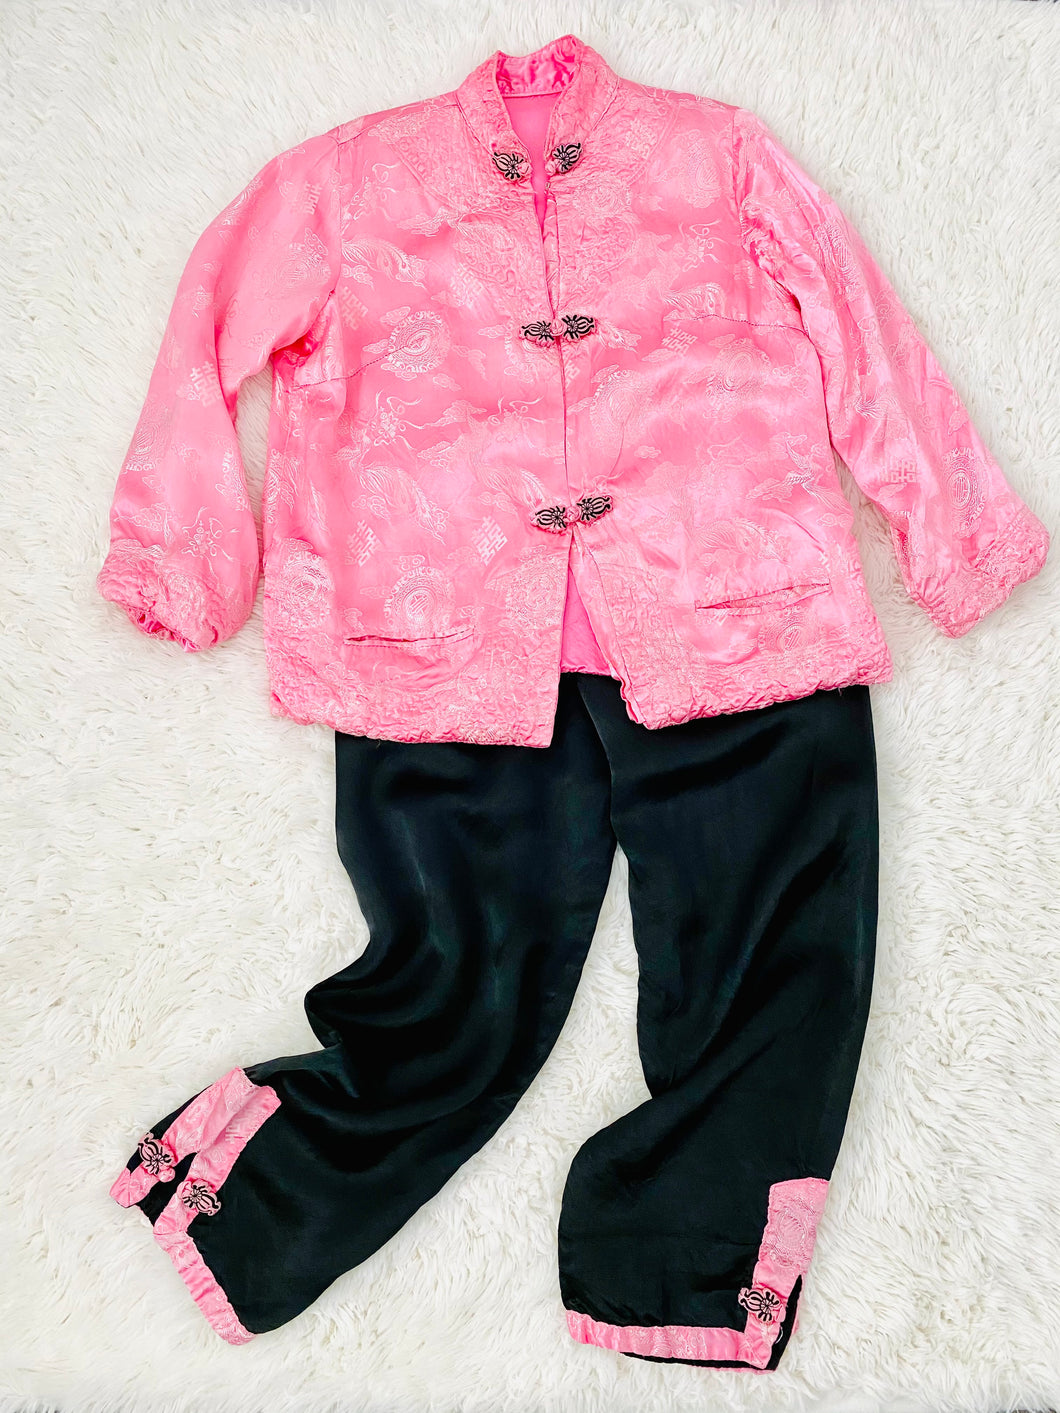 Vintage 1940s pink silk pajamas set Chinese jacket and pants